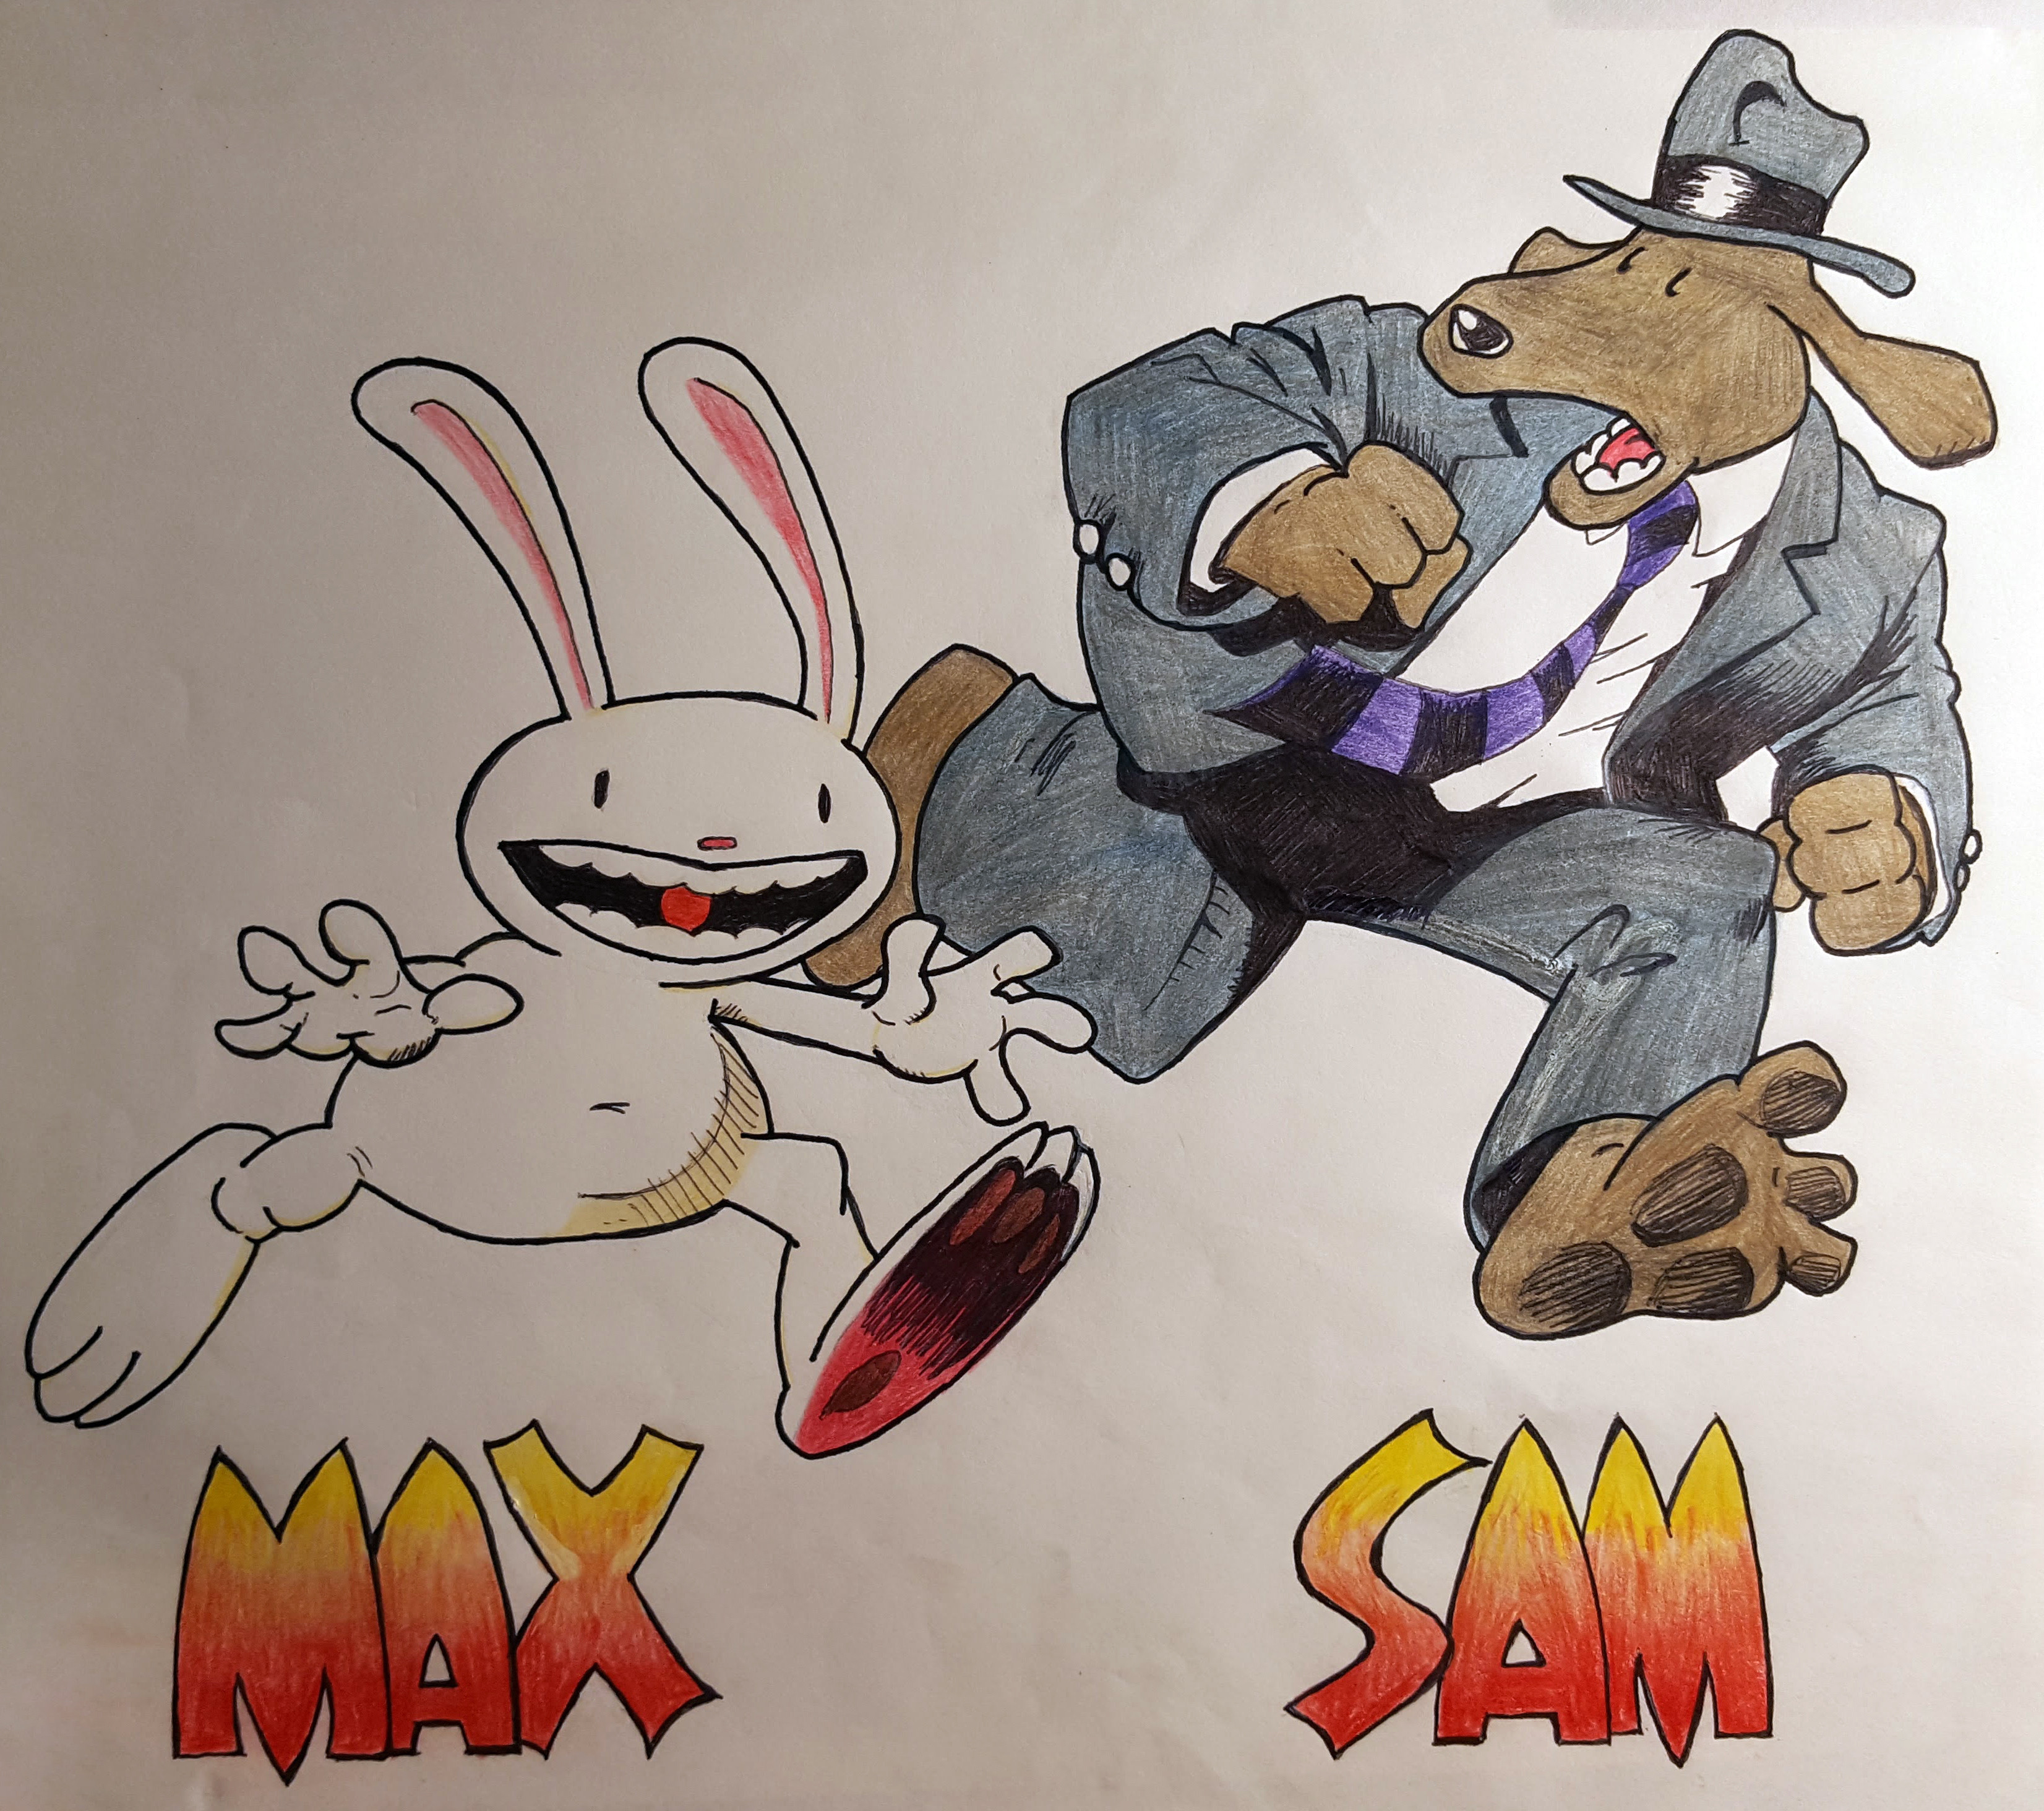 Sam &amp; Max! I identify as Max.